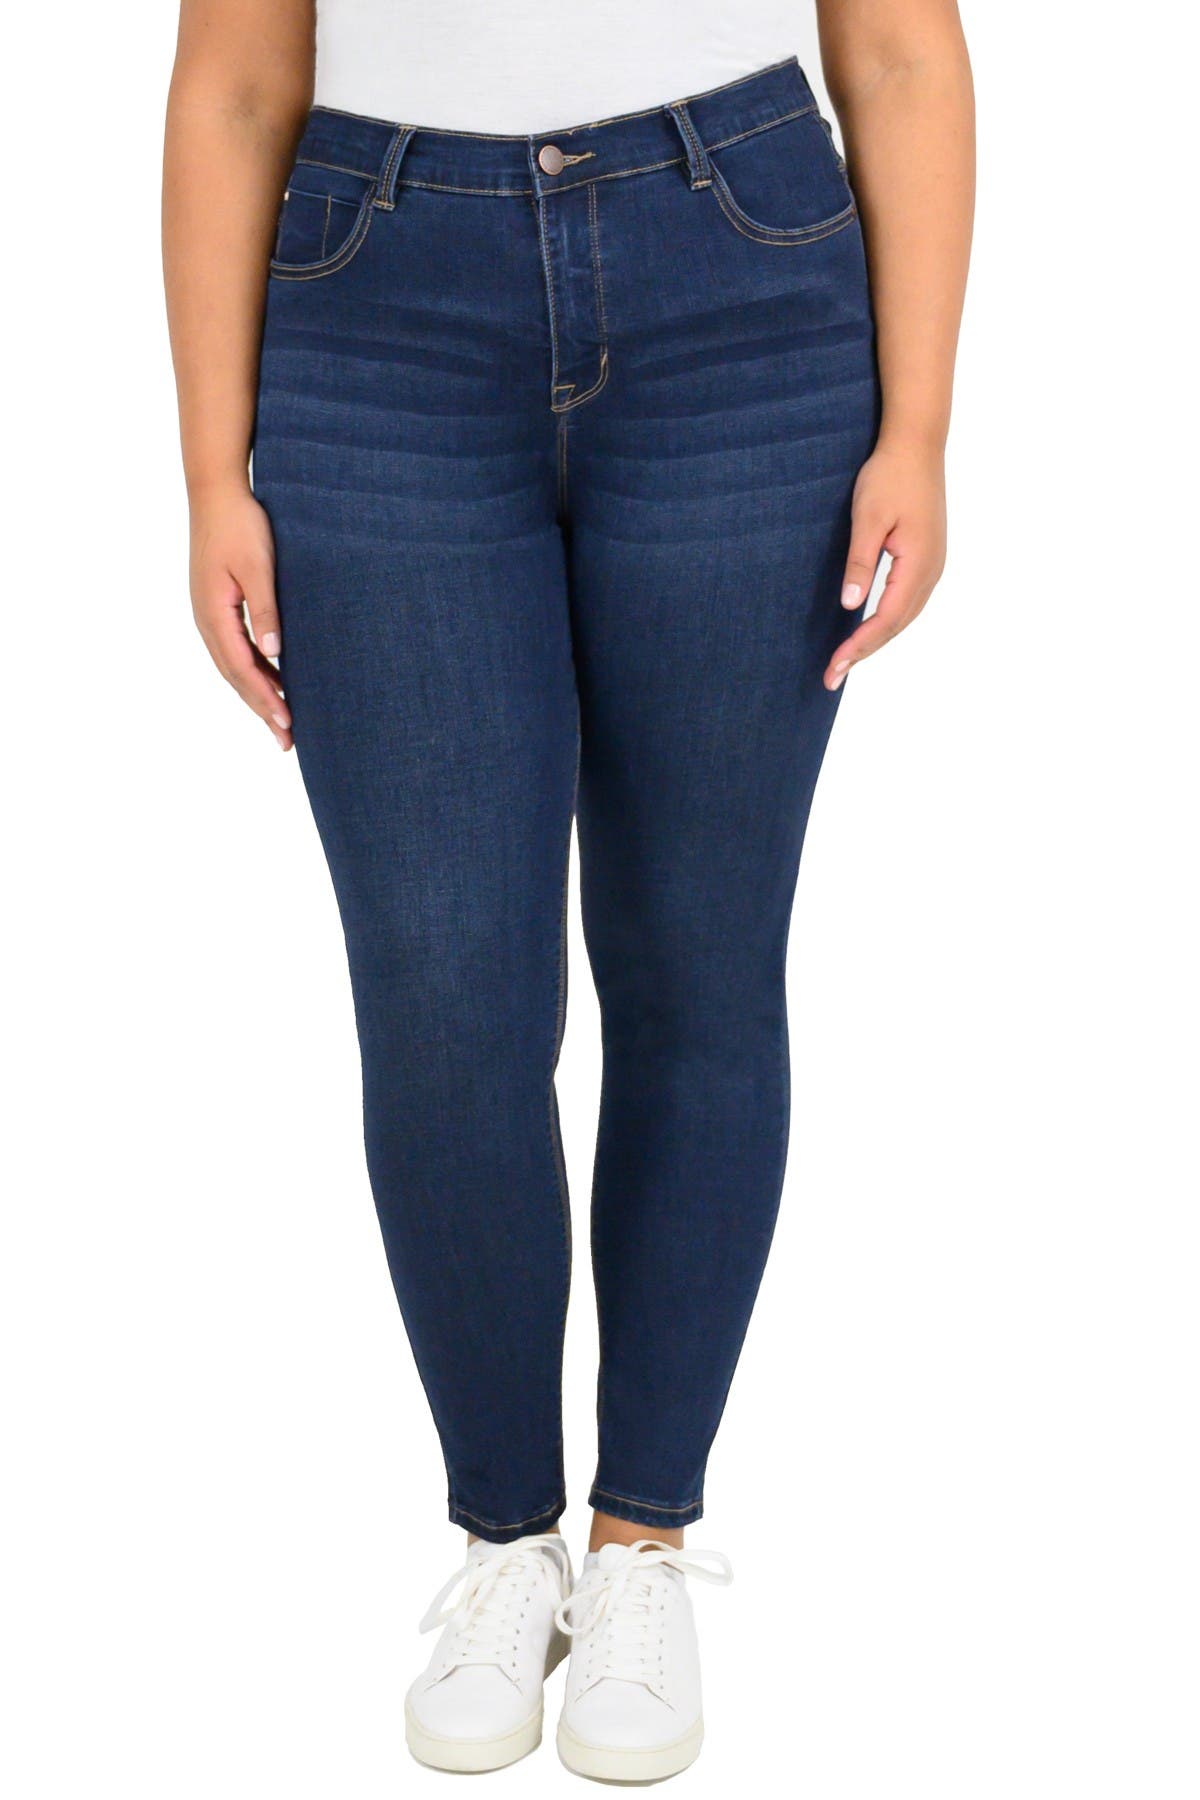 curve appeal jeans plus size clothing